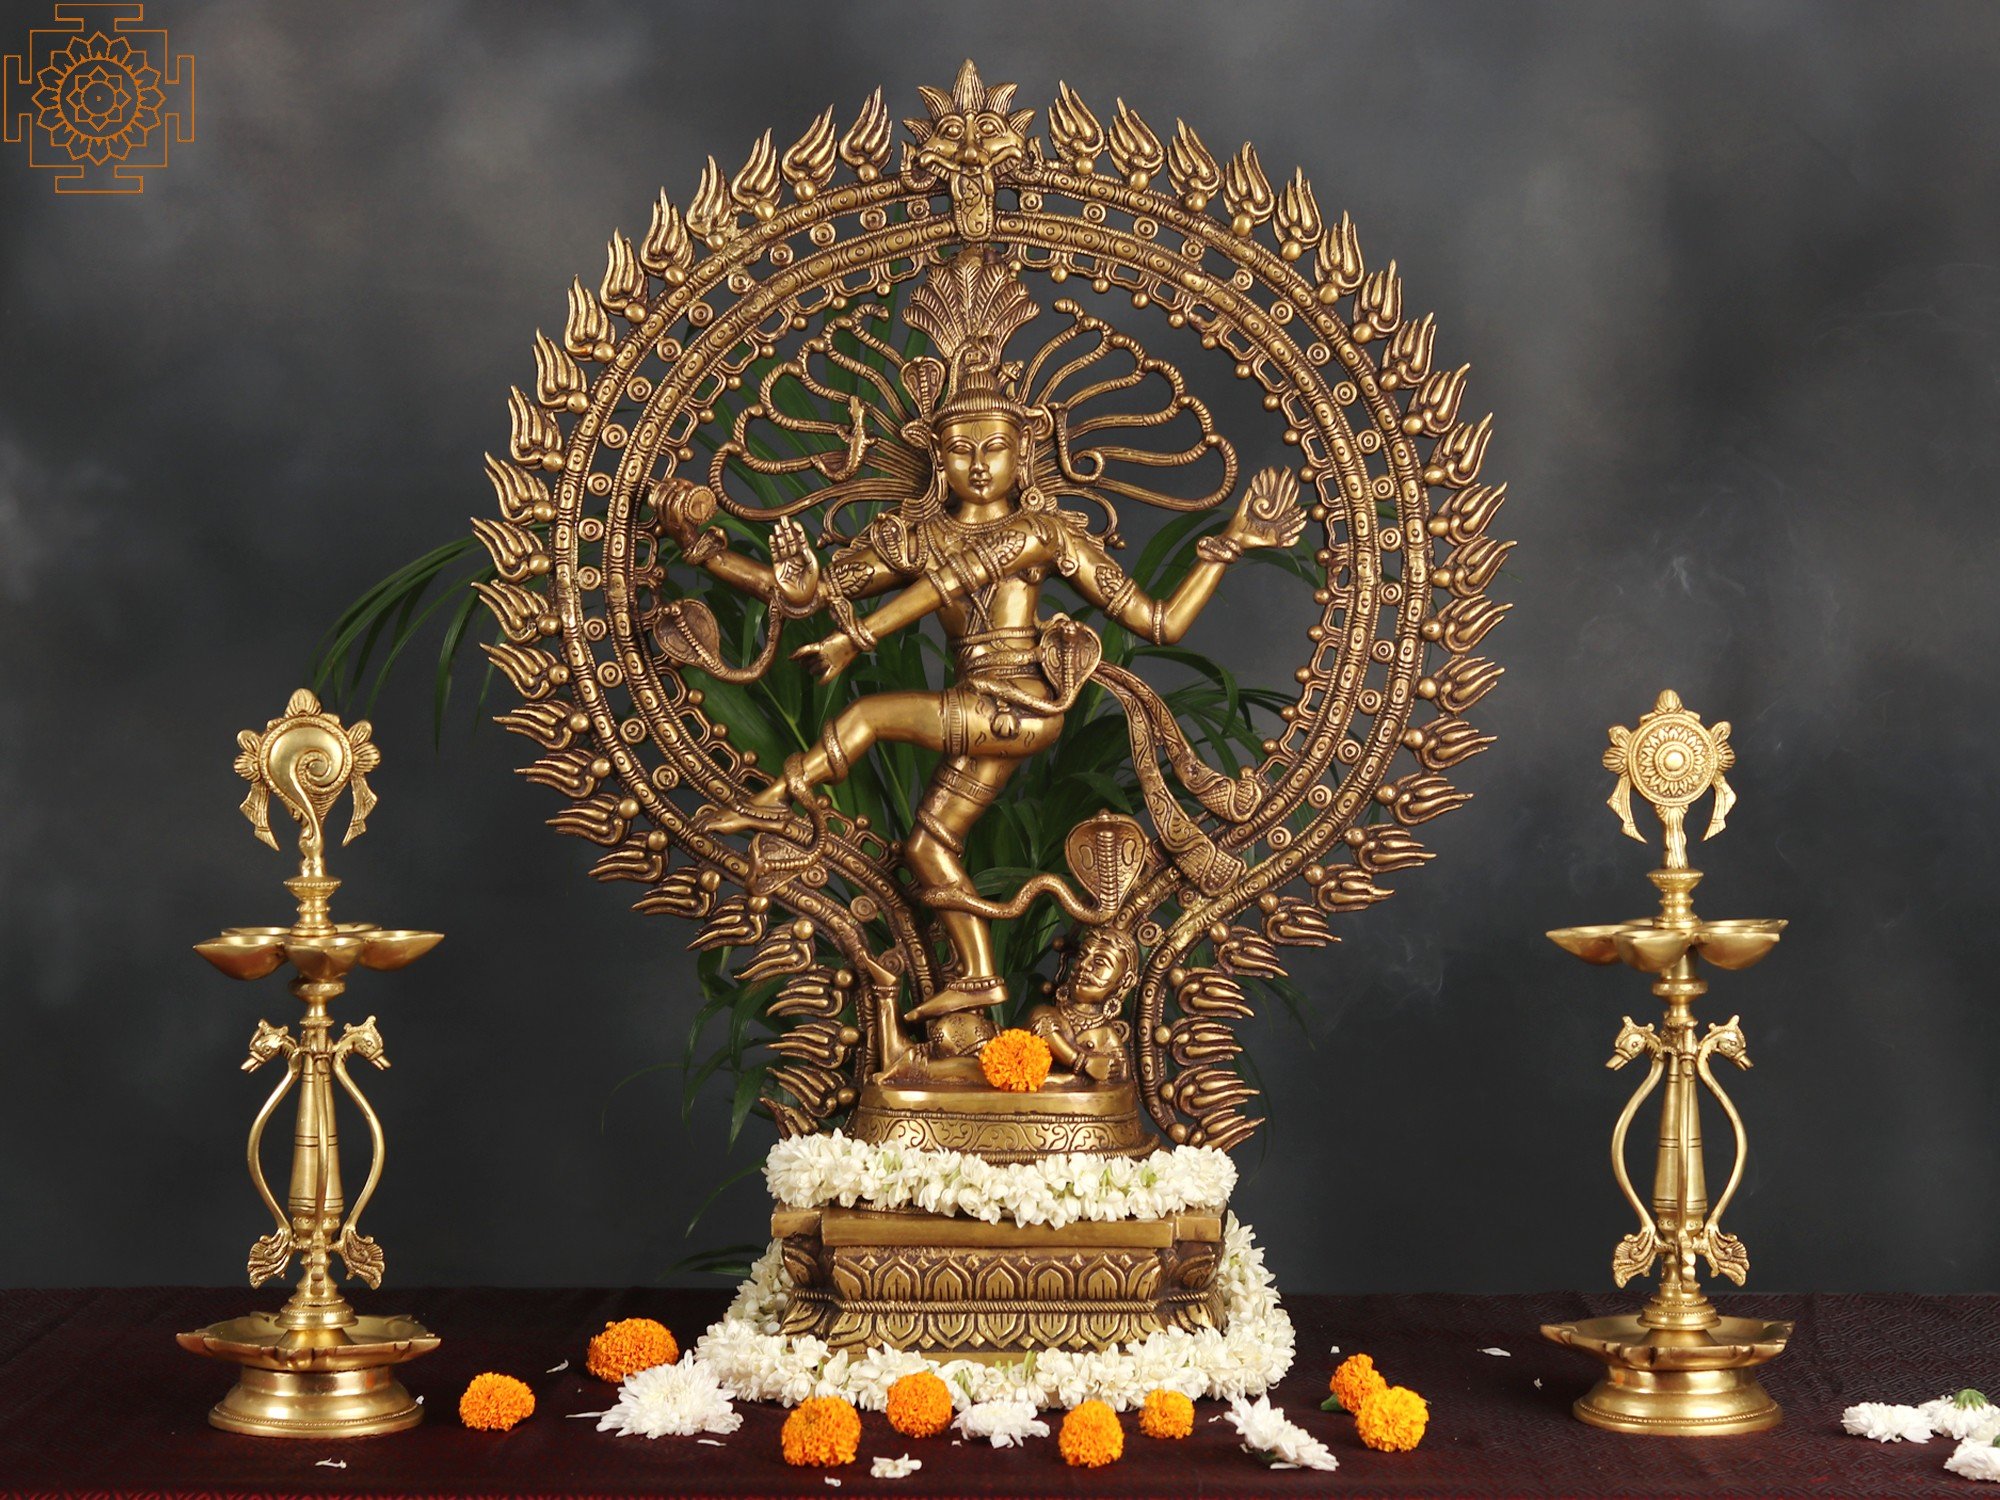 Buy Siprija Metal Lord Shiva Dancing Natraj/Nataraja Statue Showpiece  Sculpture for Home and Puja Decor Online at Best Prices in India - JioMart.